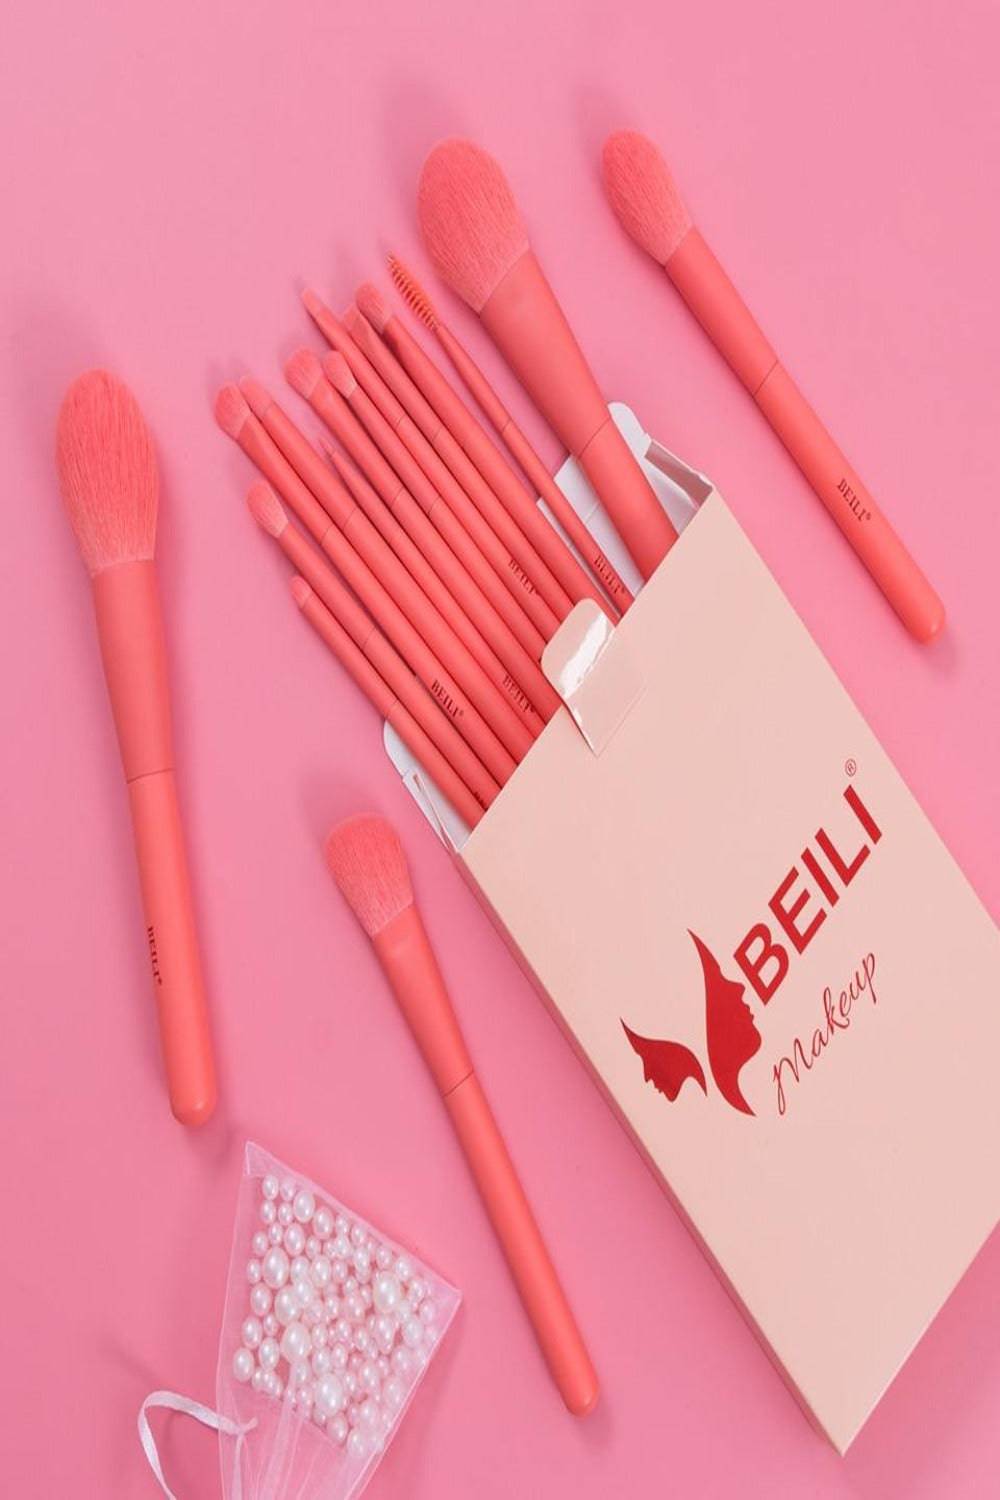 Coral Pink Vegan Nano Wool Fiber Makeup Brush Set - 15 Pcs